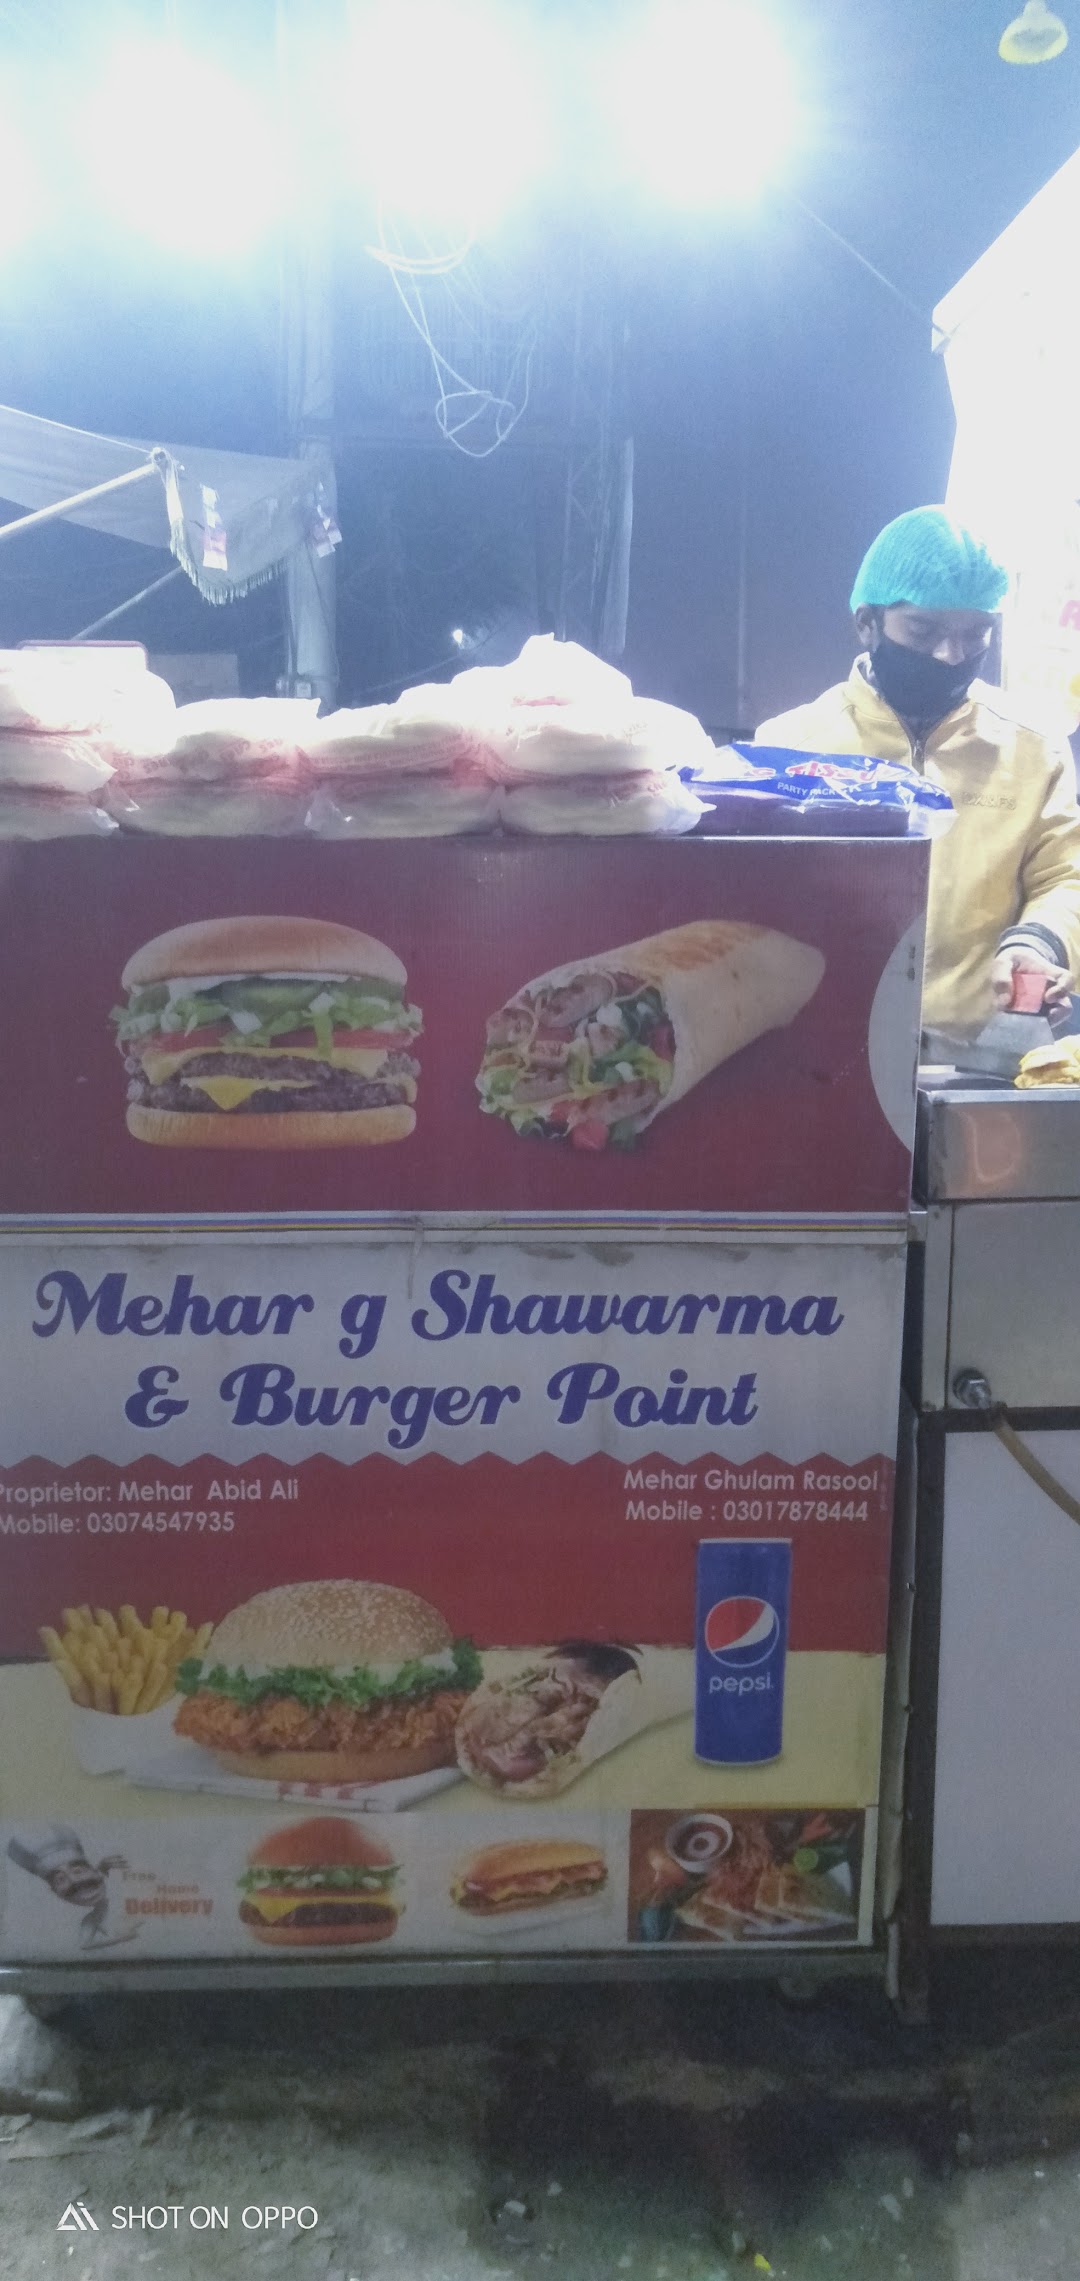 Mehar g Shawarma & Burger point